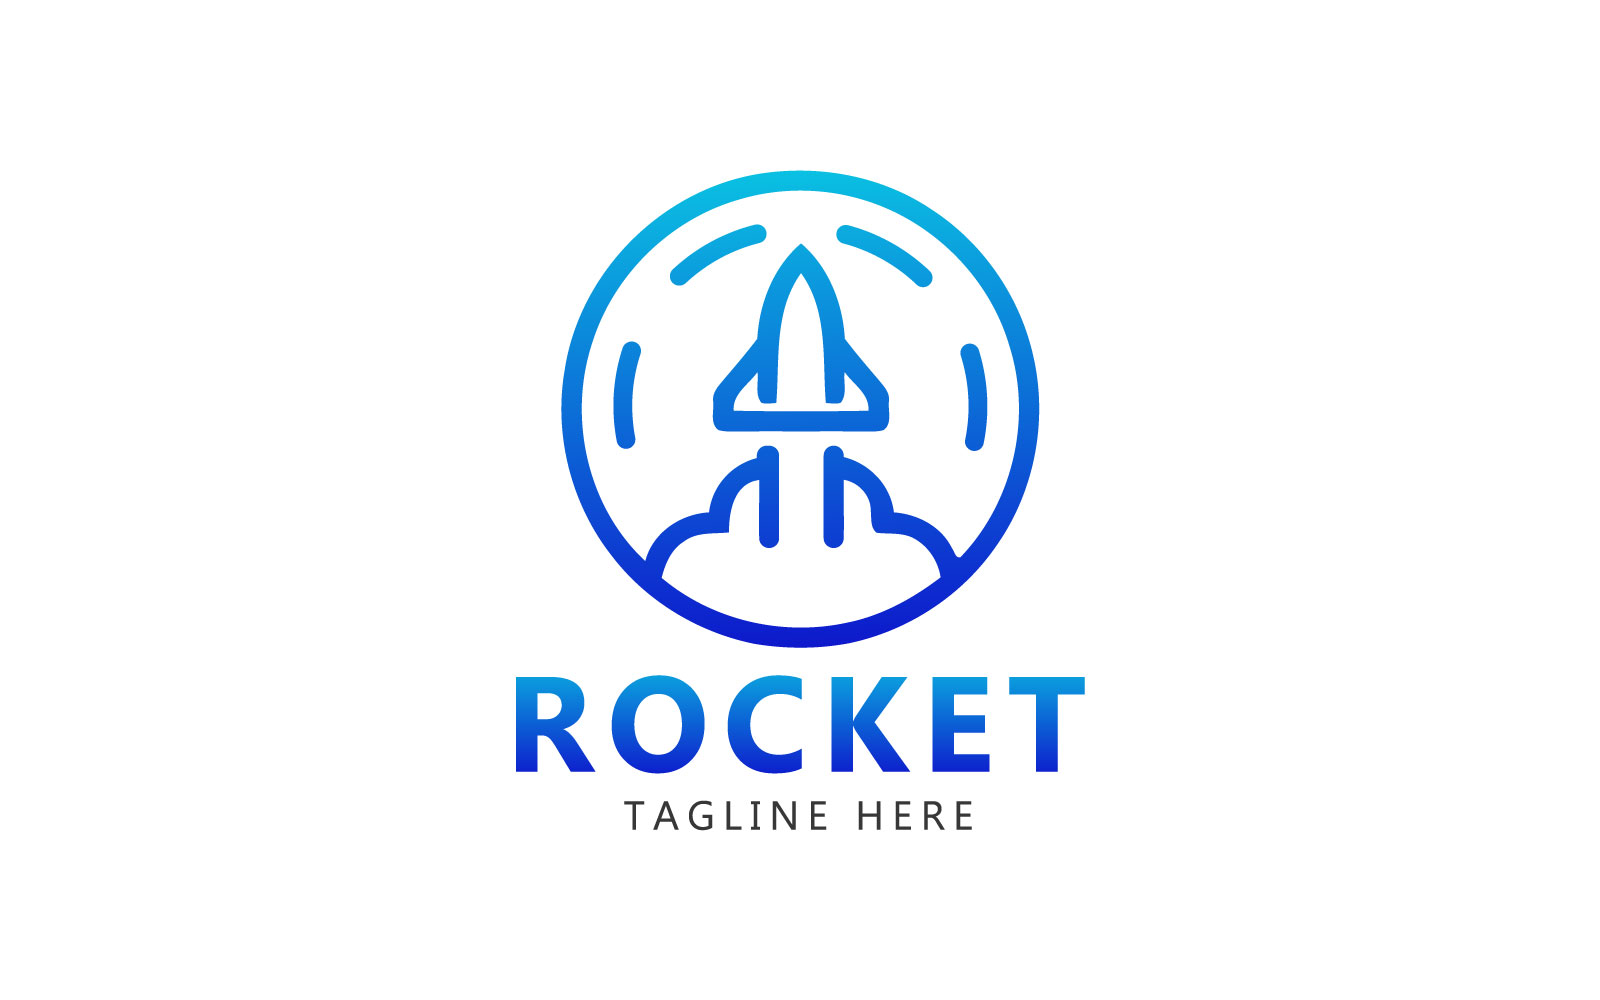 Rocket Logo And Startup Rocket Space Ship Logo Template